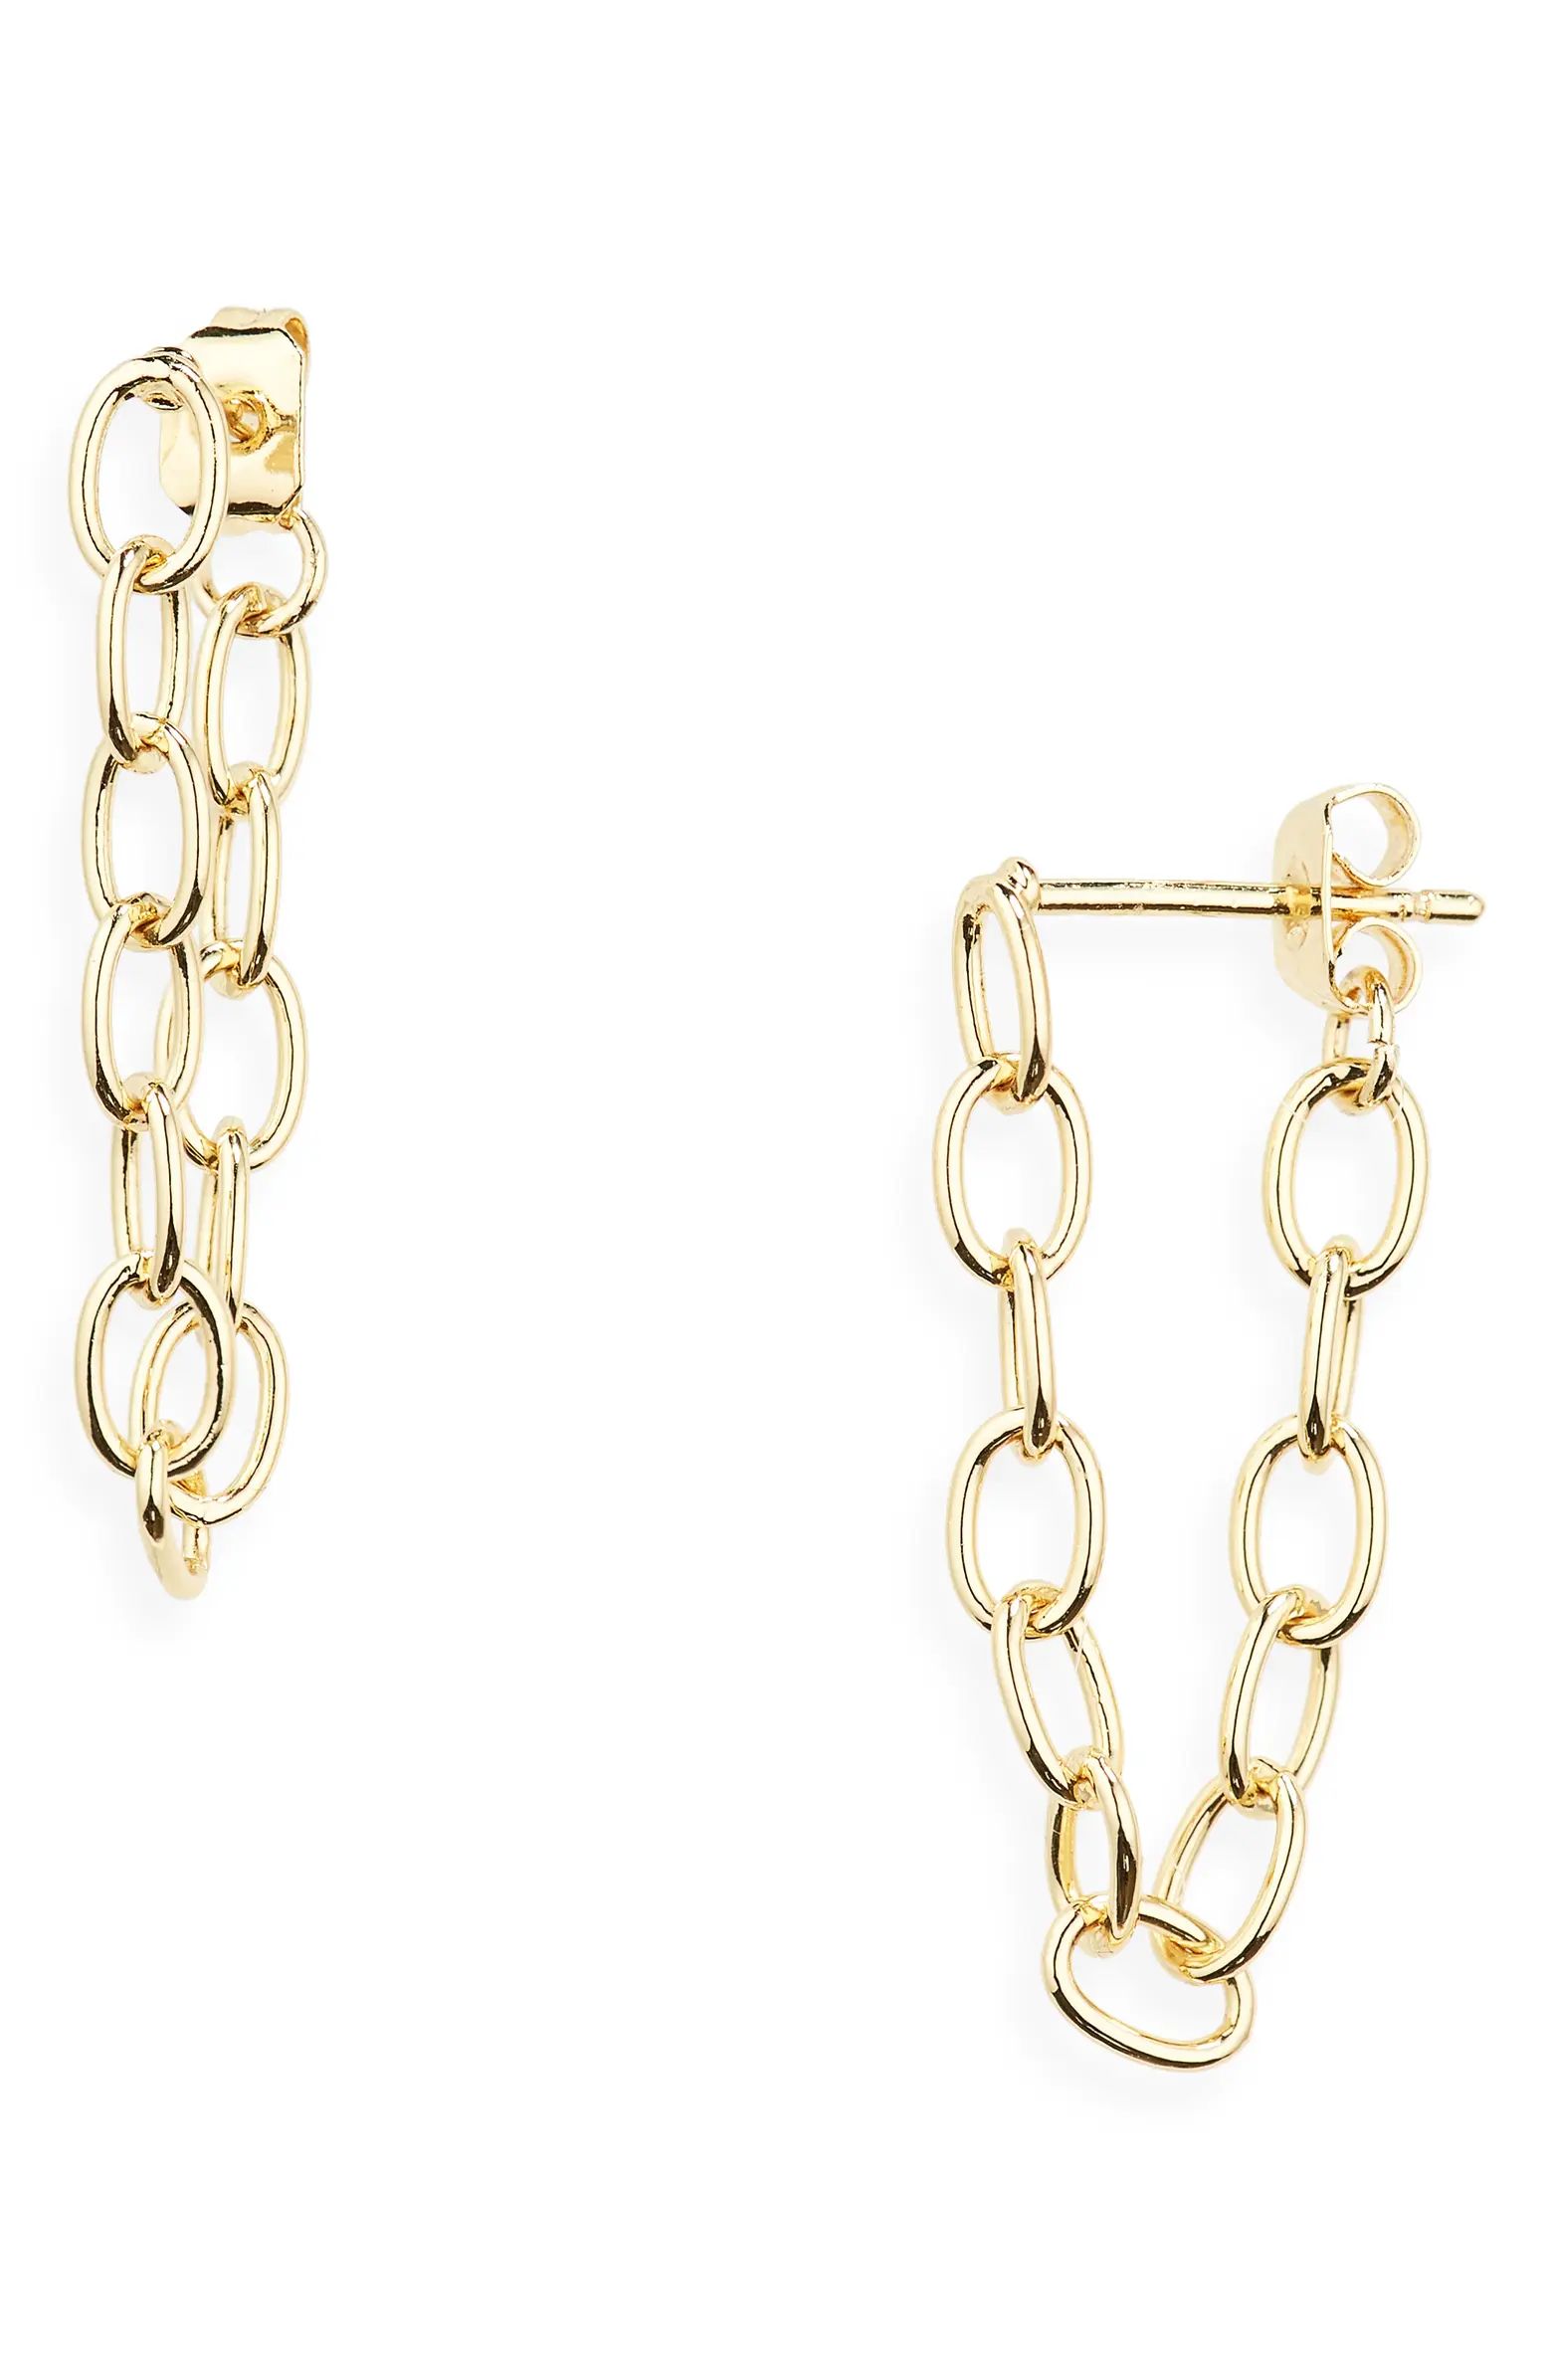 Demifine Draped Chain Drop Earrings | Nordstrom